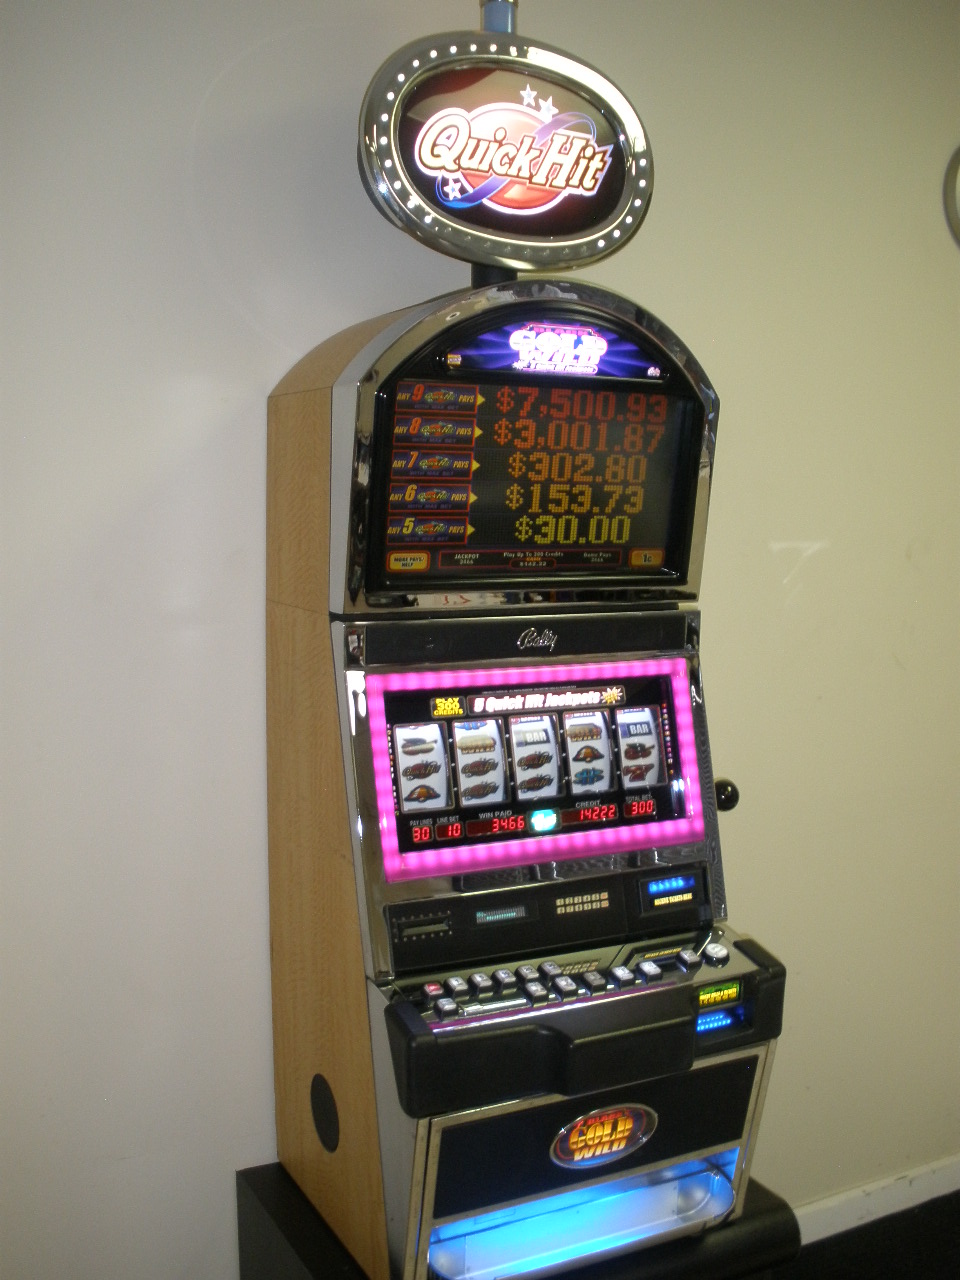 slot machine quick hit slots free coins